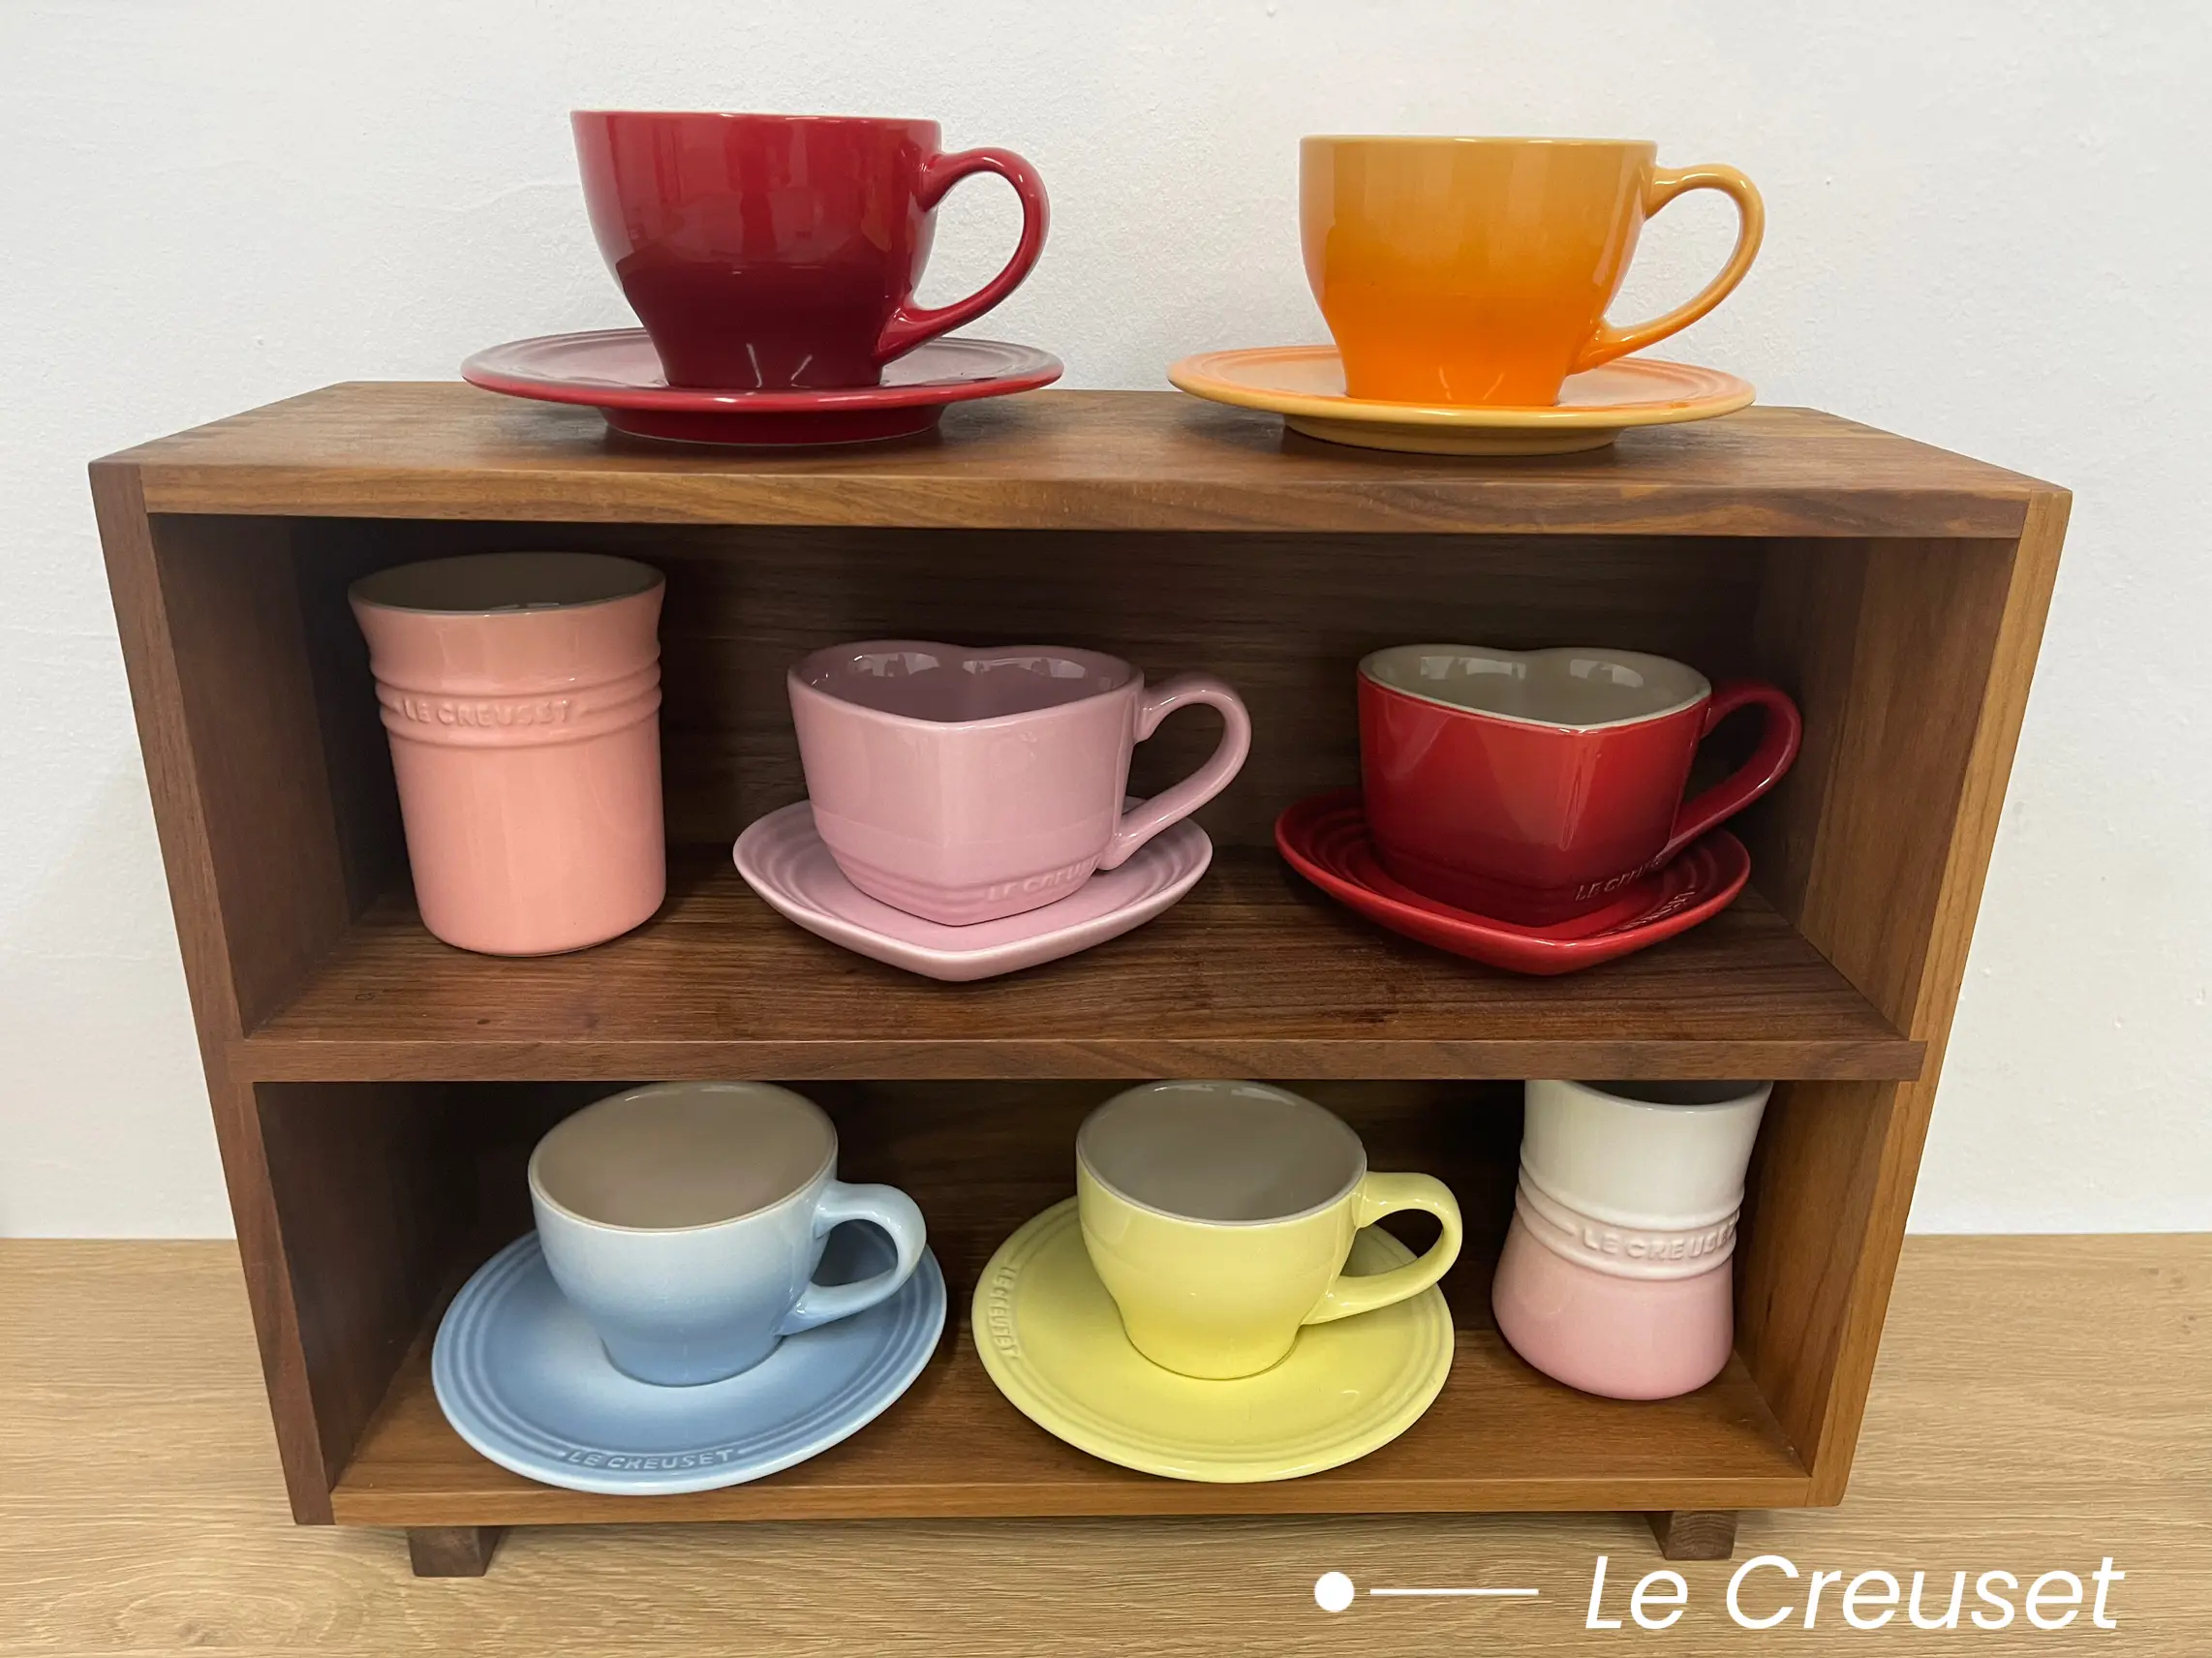 67 - cute kitchenware - ideas  kitchenware, kitchen items, le creuset  cookware